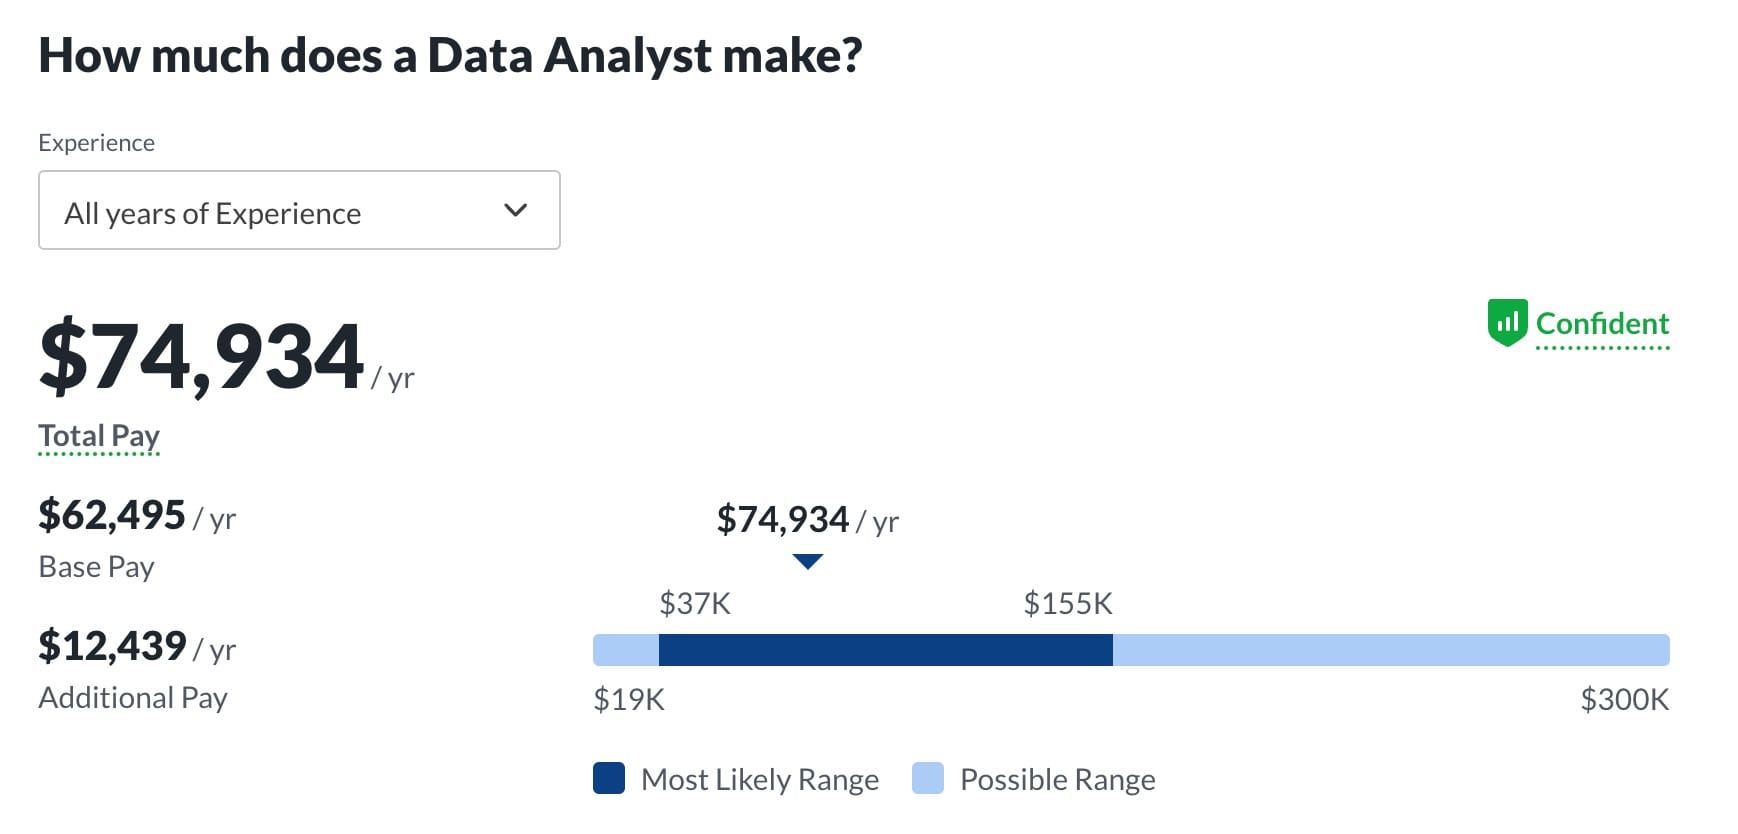 Data Analyst Salary